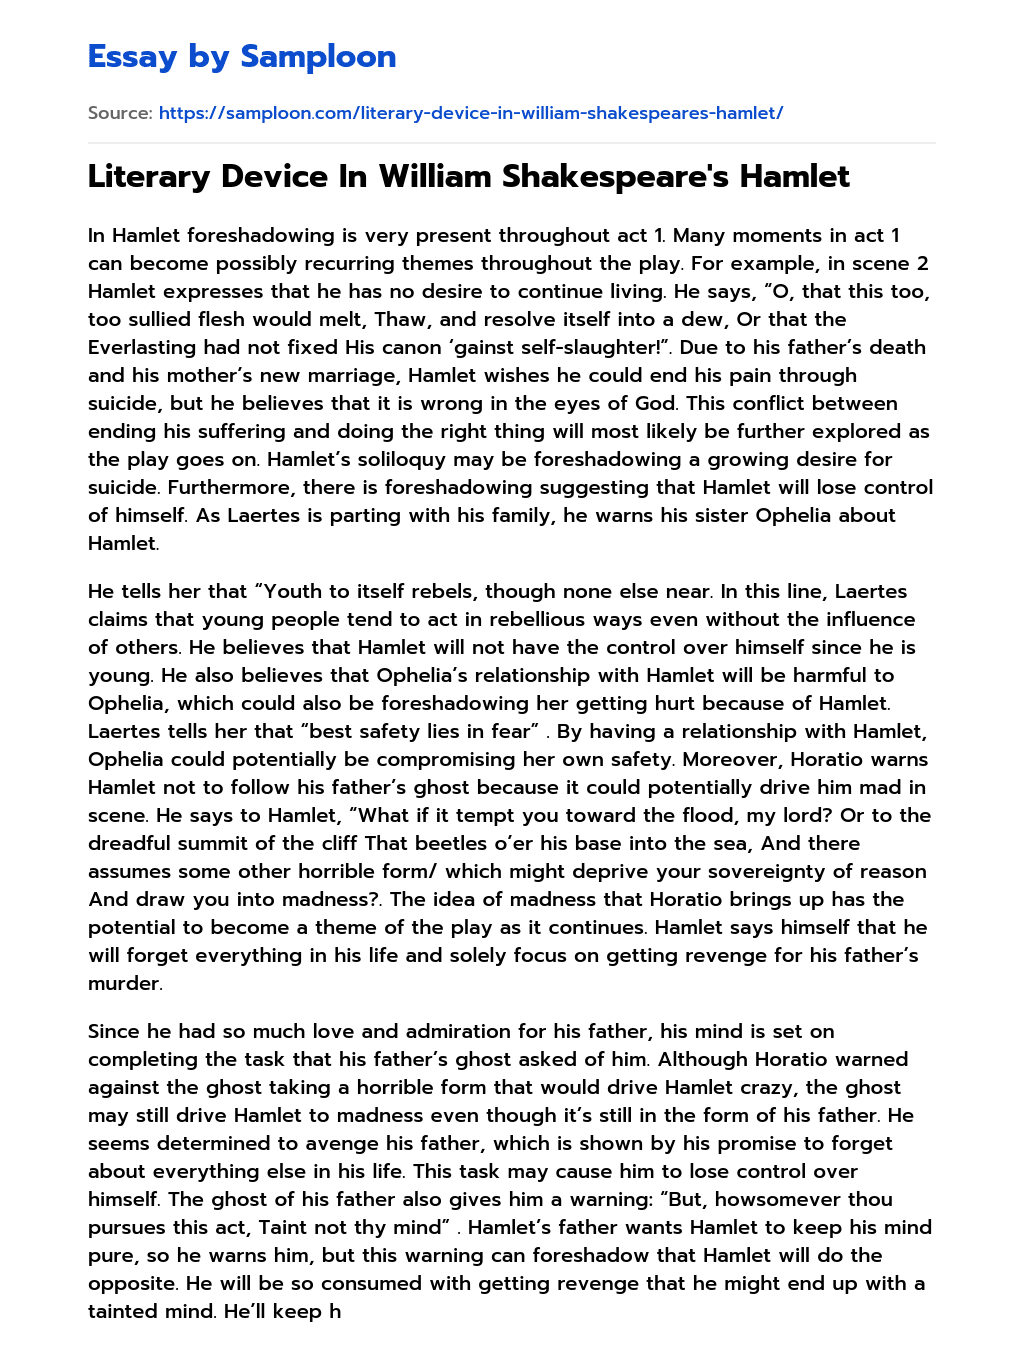 Literary Device In William Shakespeare’s Hamlet essay